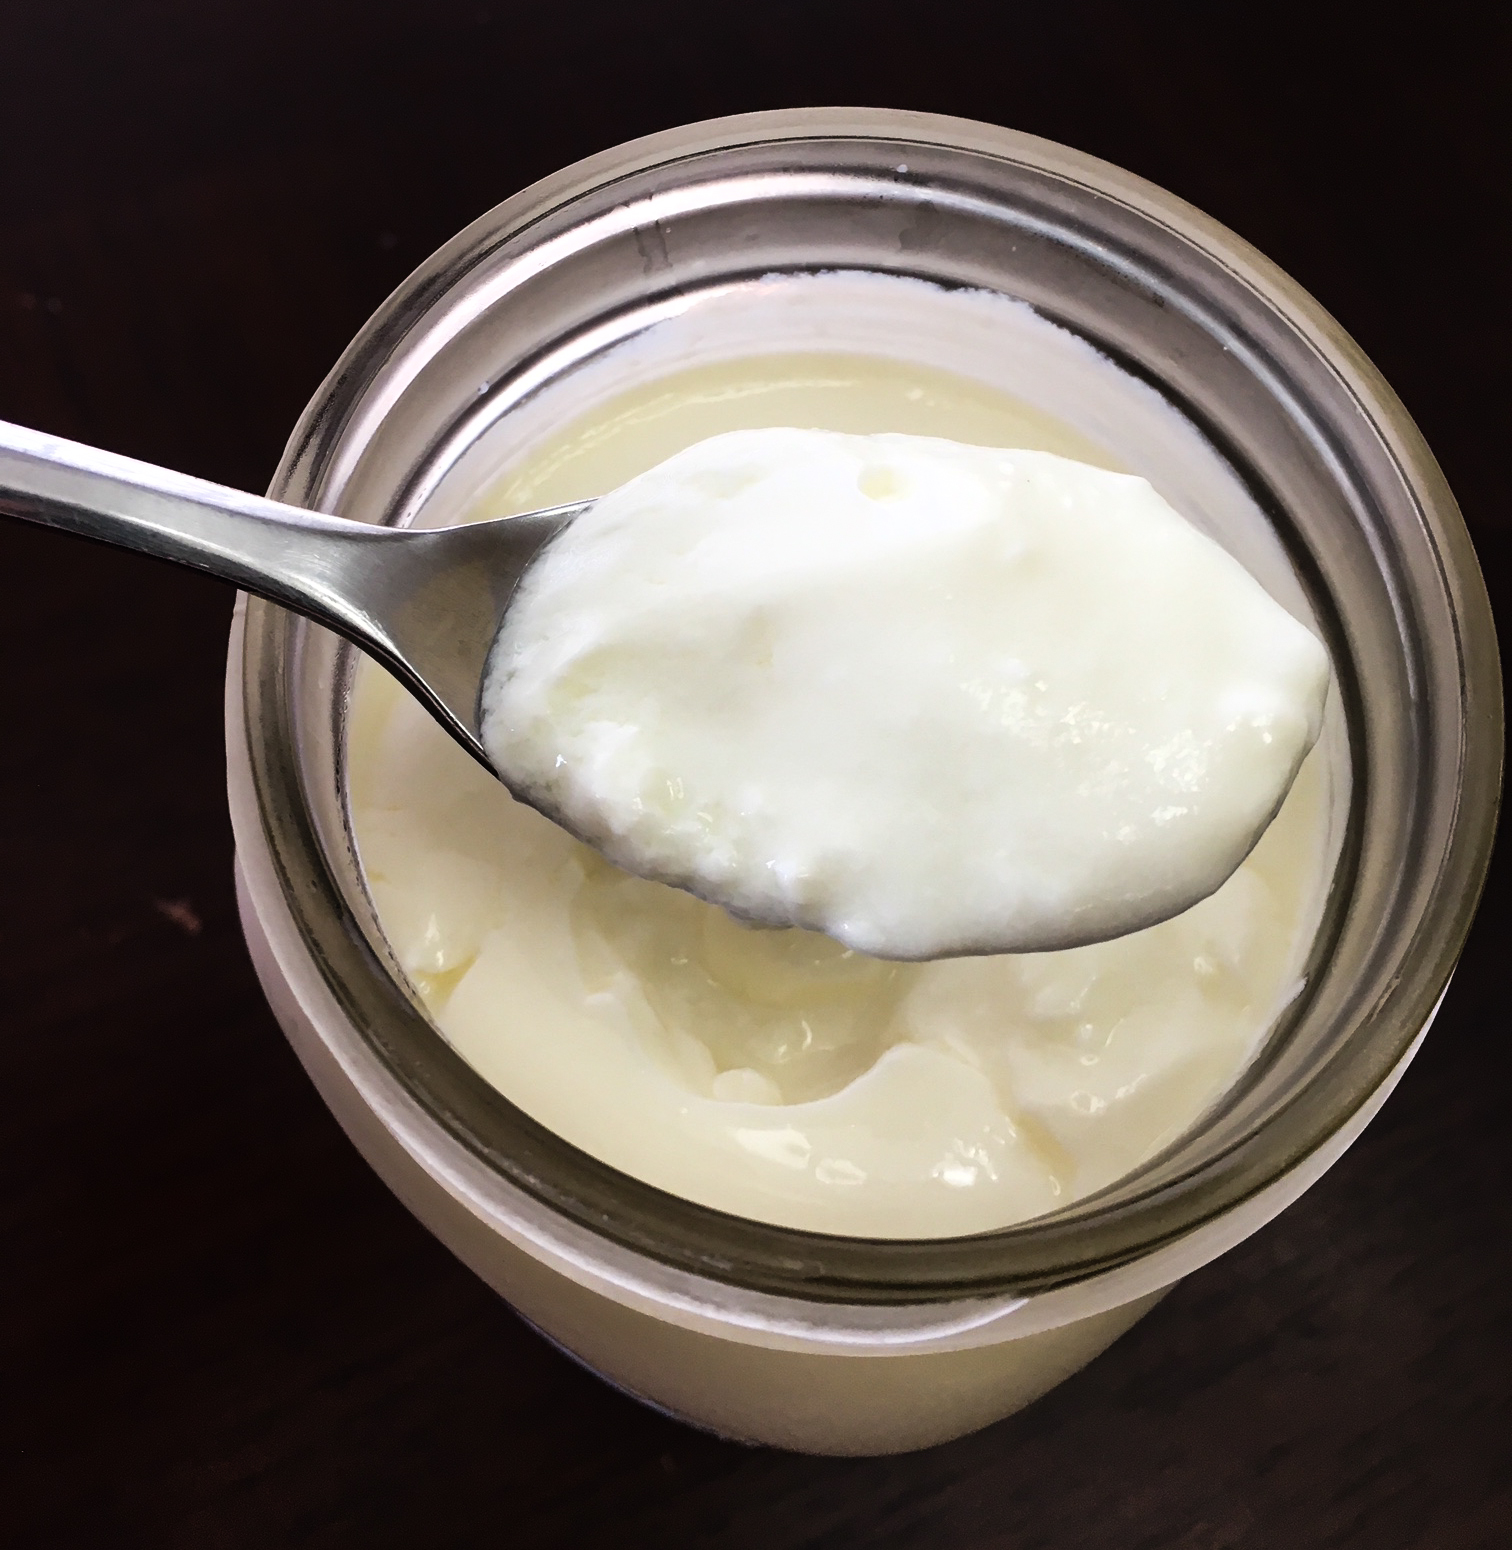 How to make the best tasting homemade milk kefir - Tyrant Farms